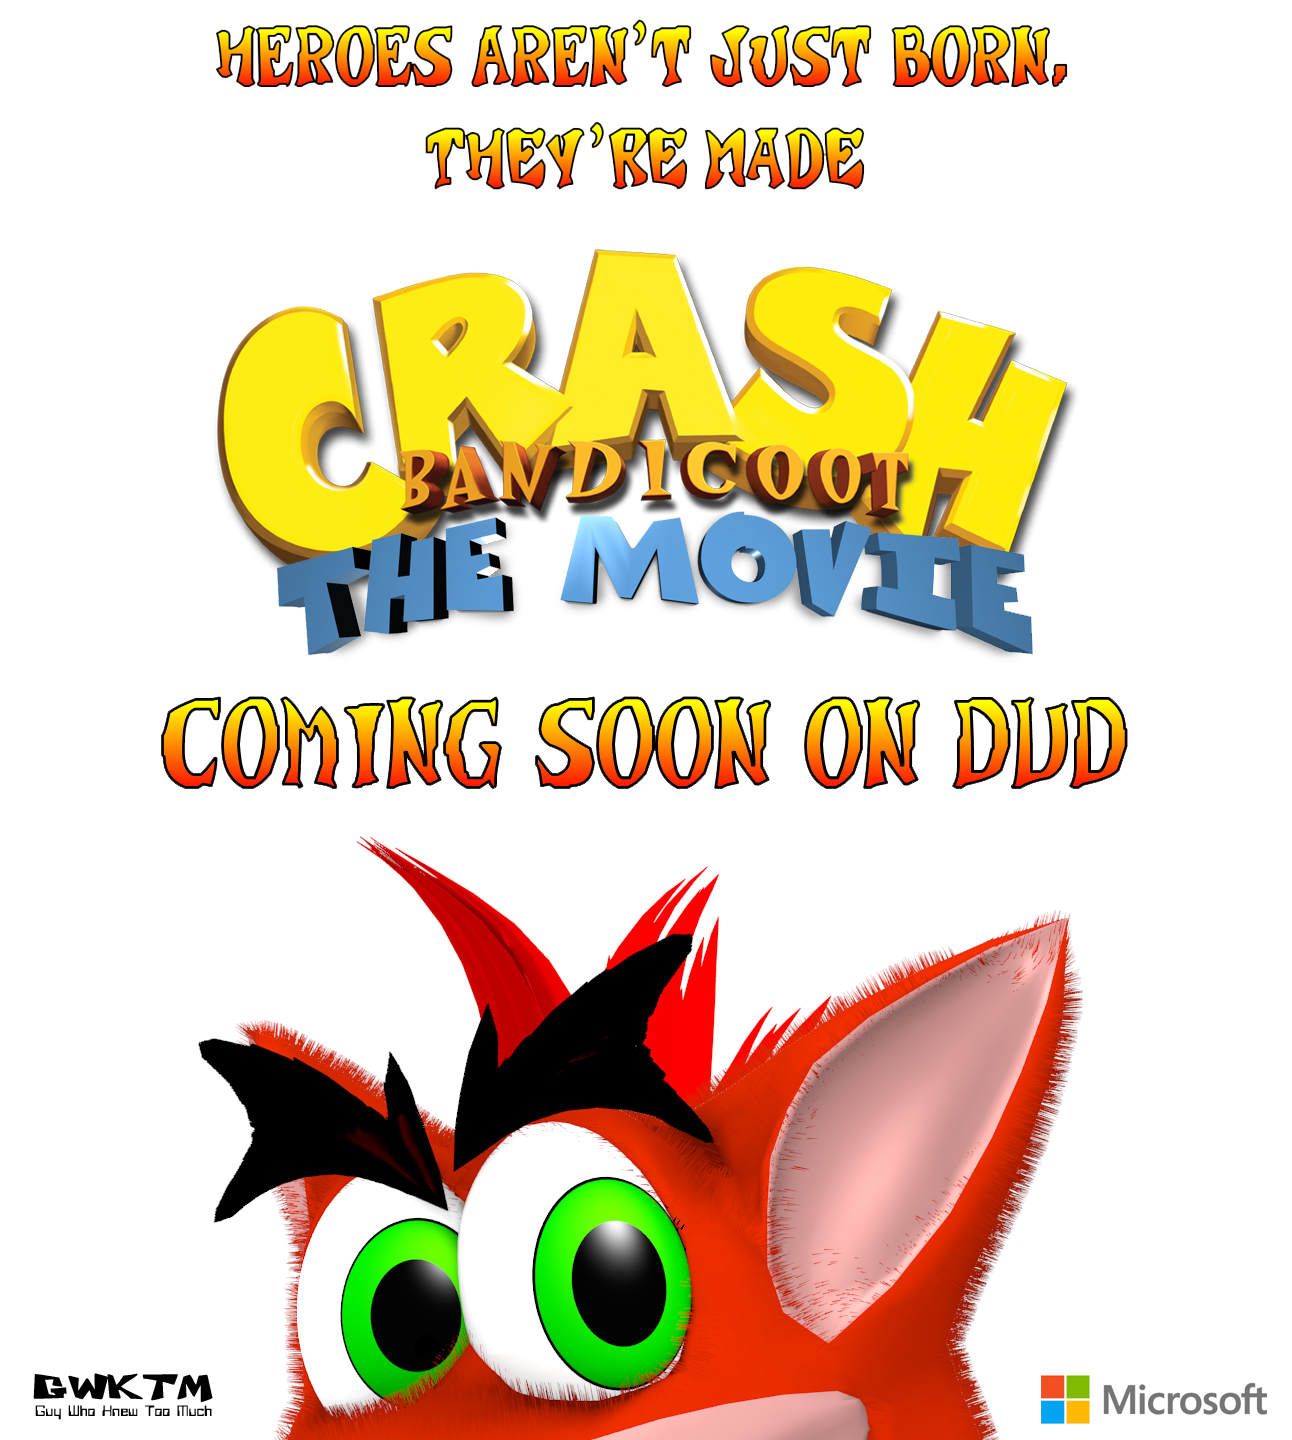 Crash Movie Poster by JAC59COL on DeviantArt